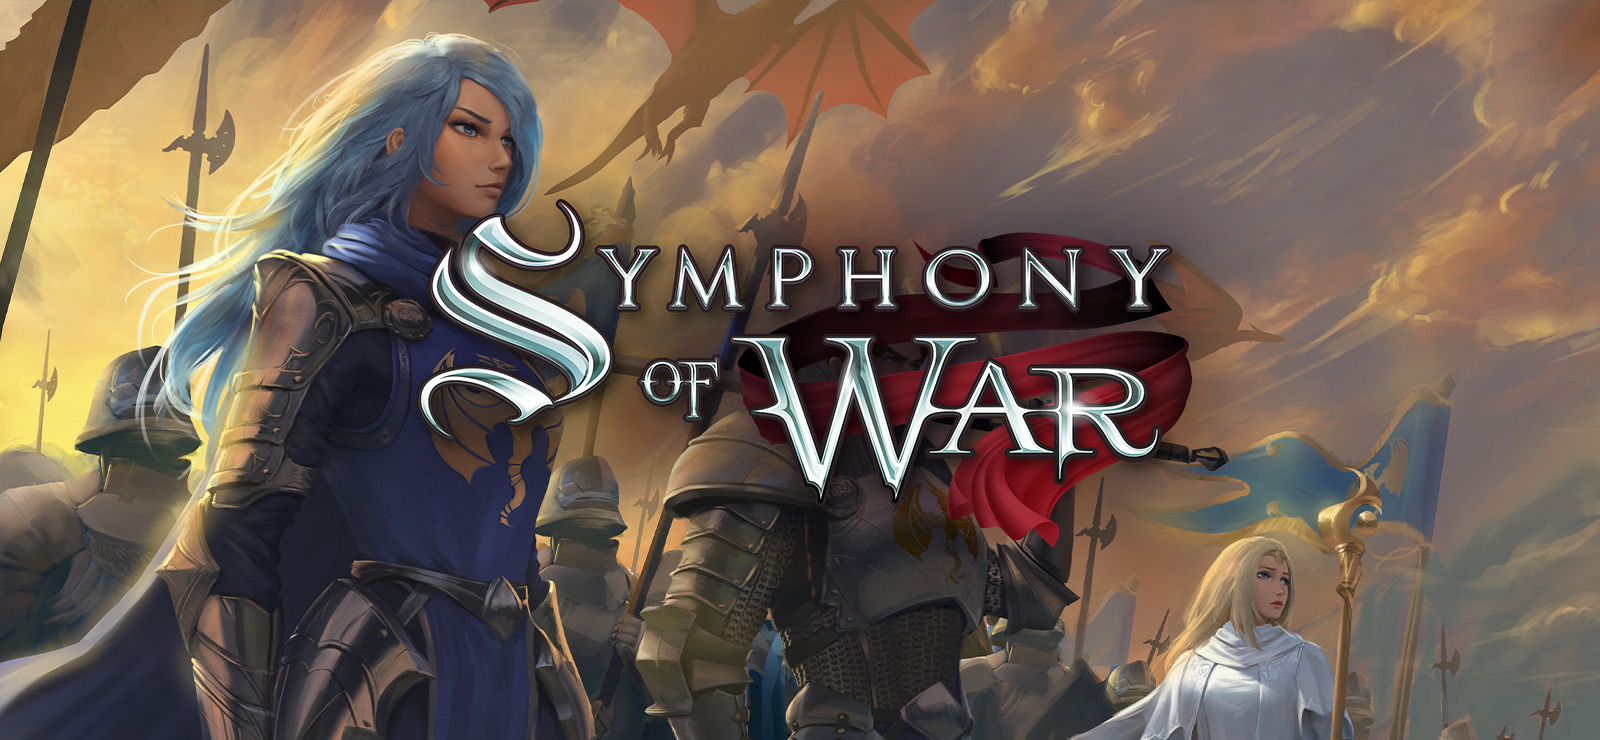 Symphony of War download